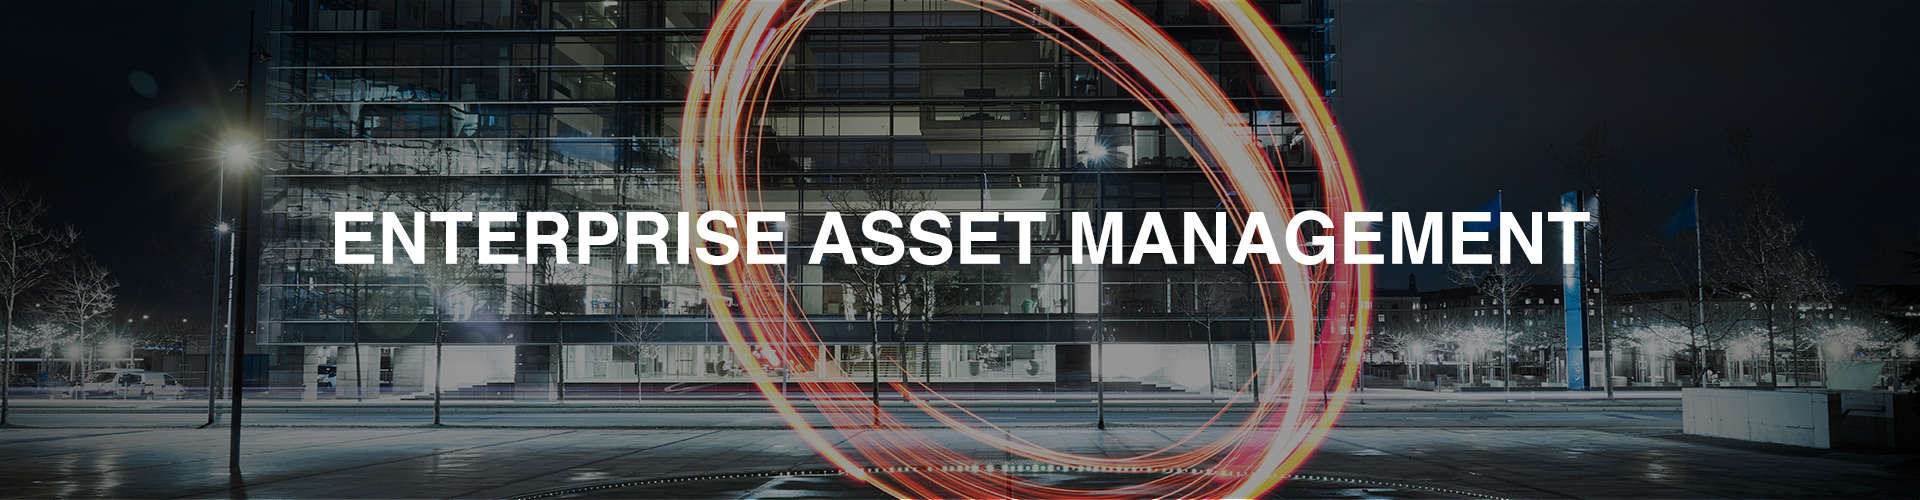 Enteprise Asset Management (APM)